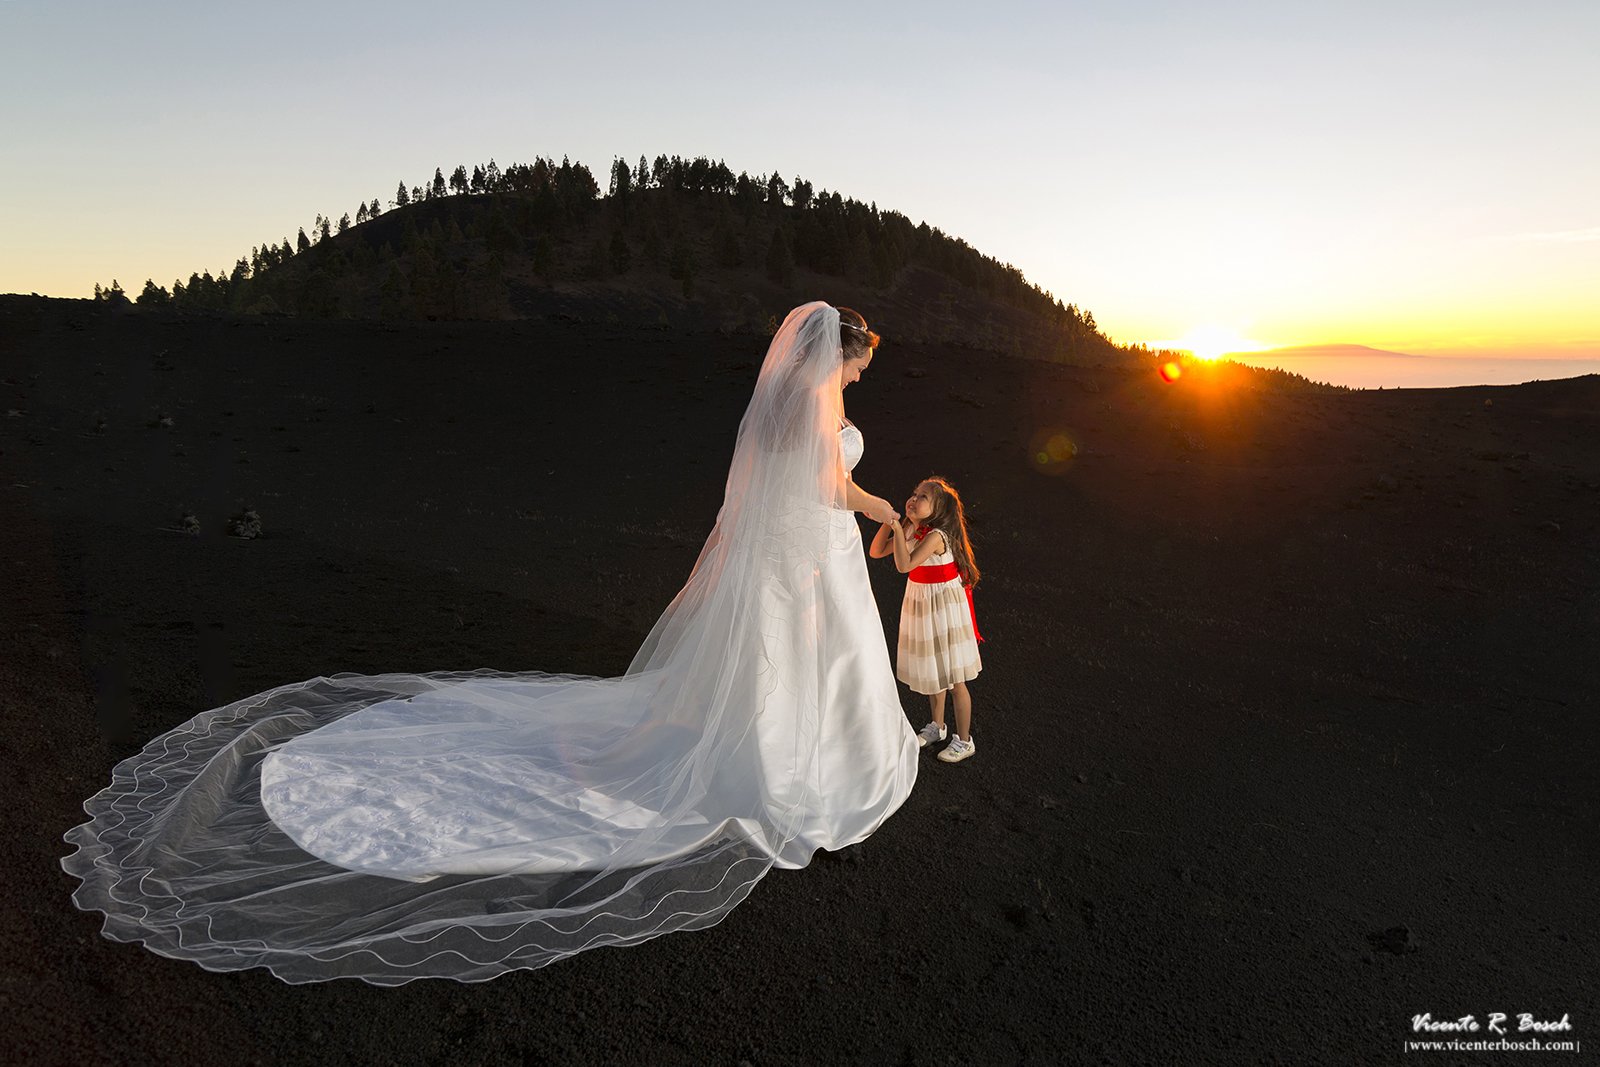 Postboda en Tenerife - Vicente R. Bosch - Fotógrafo boda Tenerife